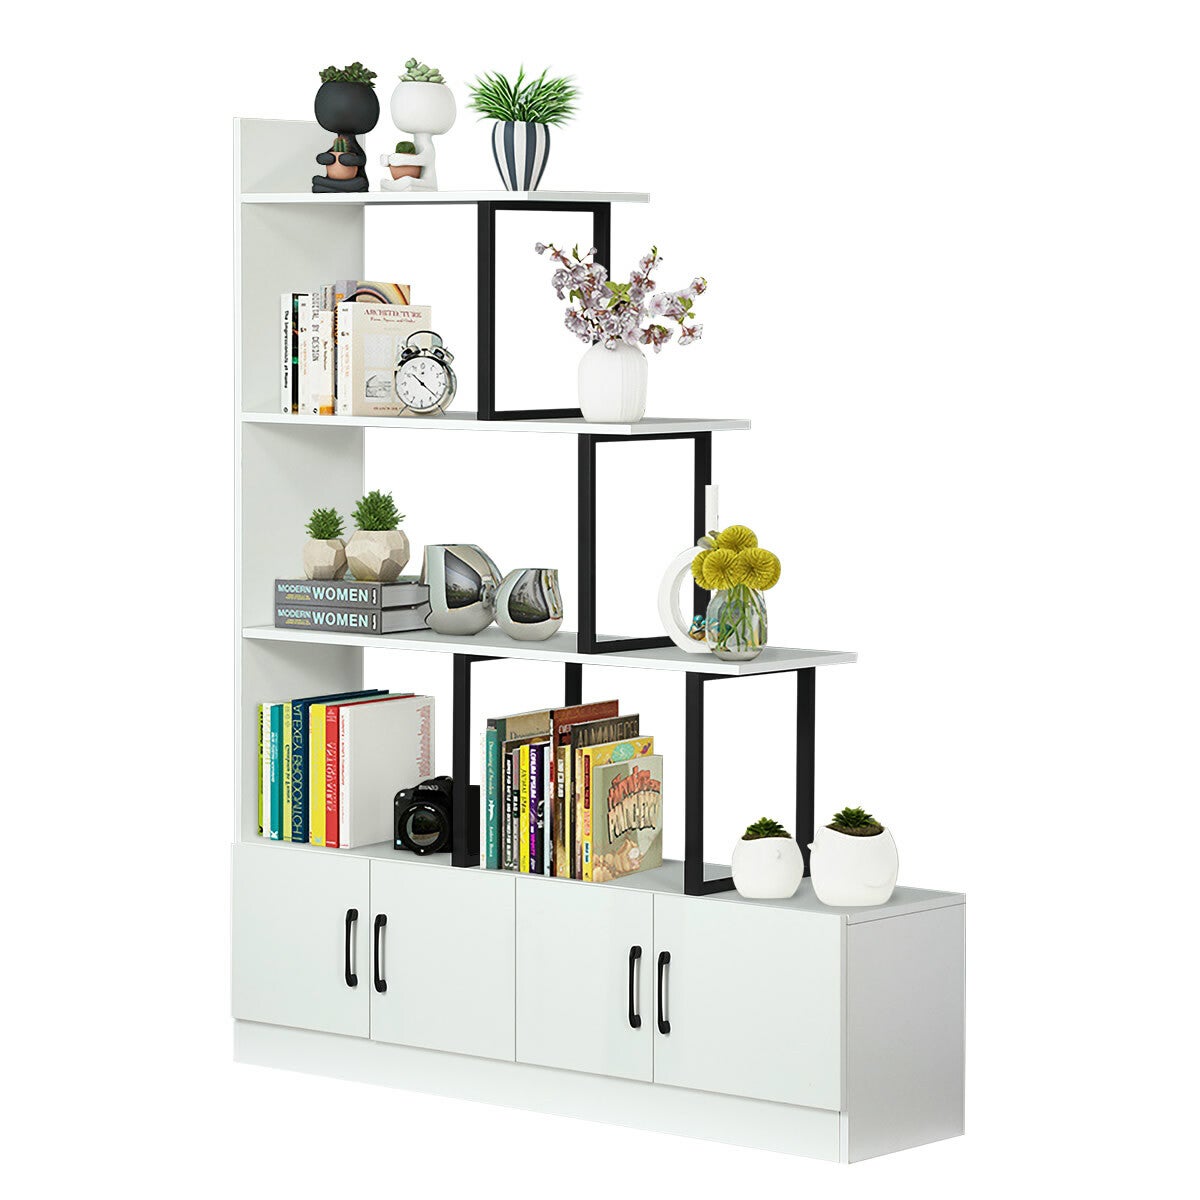 5 Level Ladder Bookshelves Bookcase Storage Cabinet Cube Shelf Display Unit with Doors